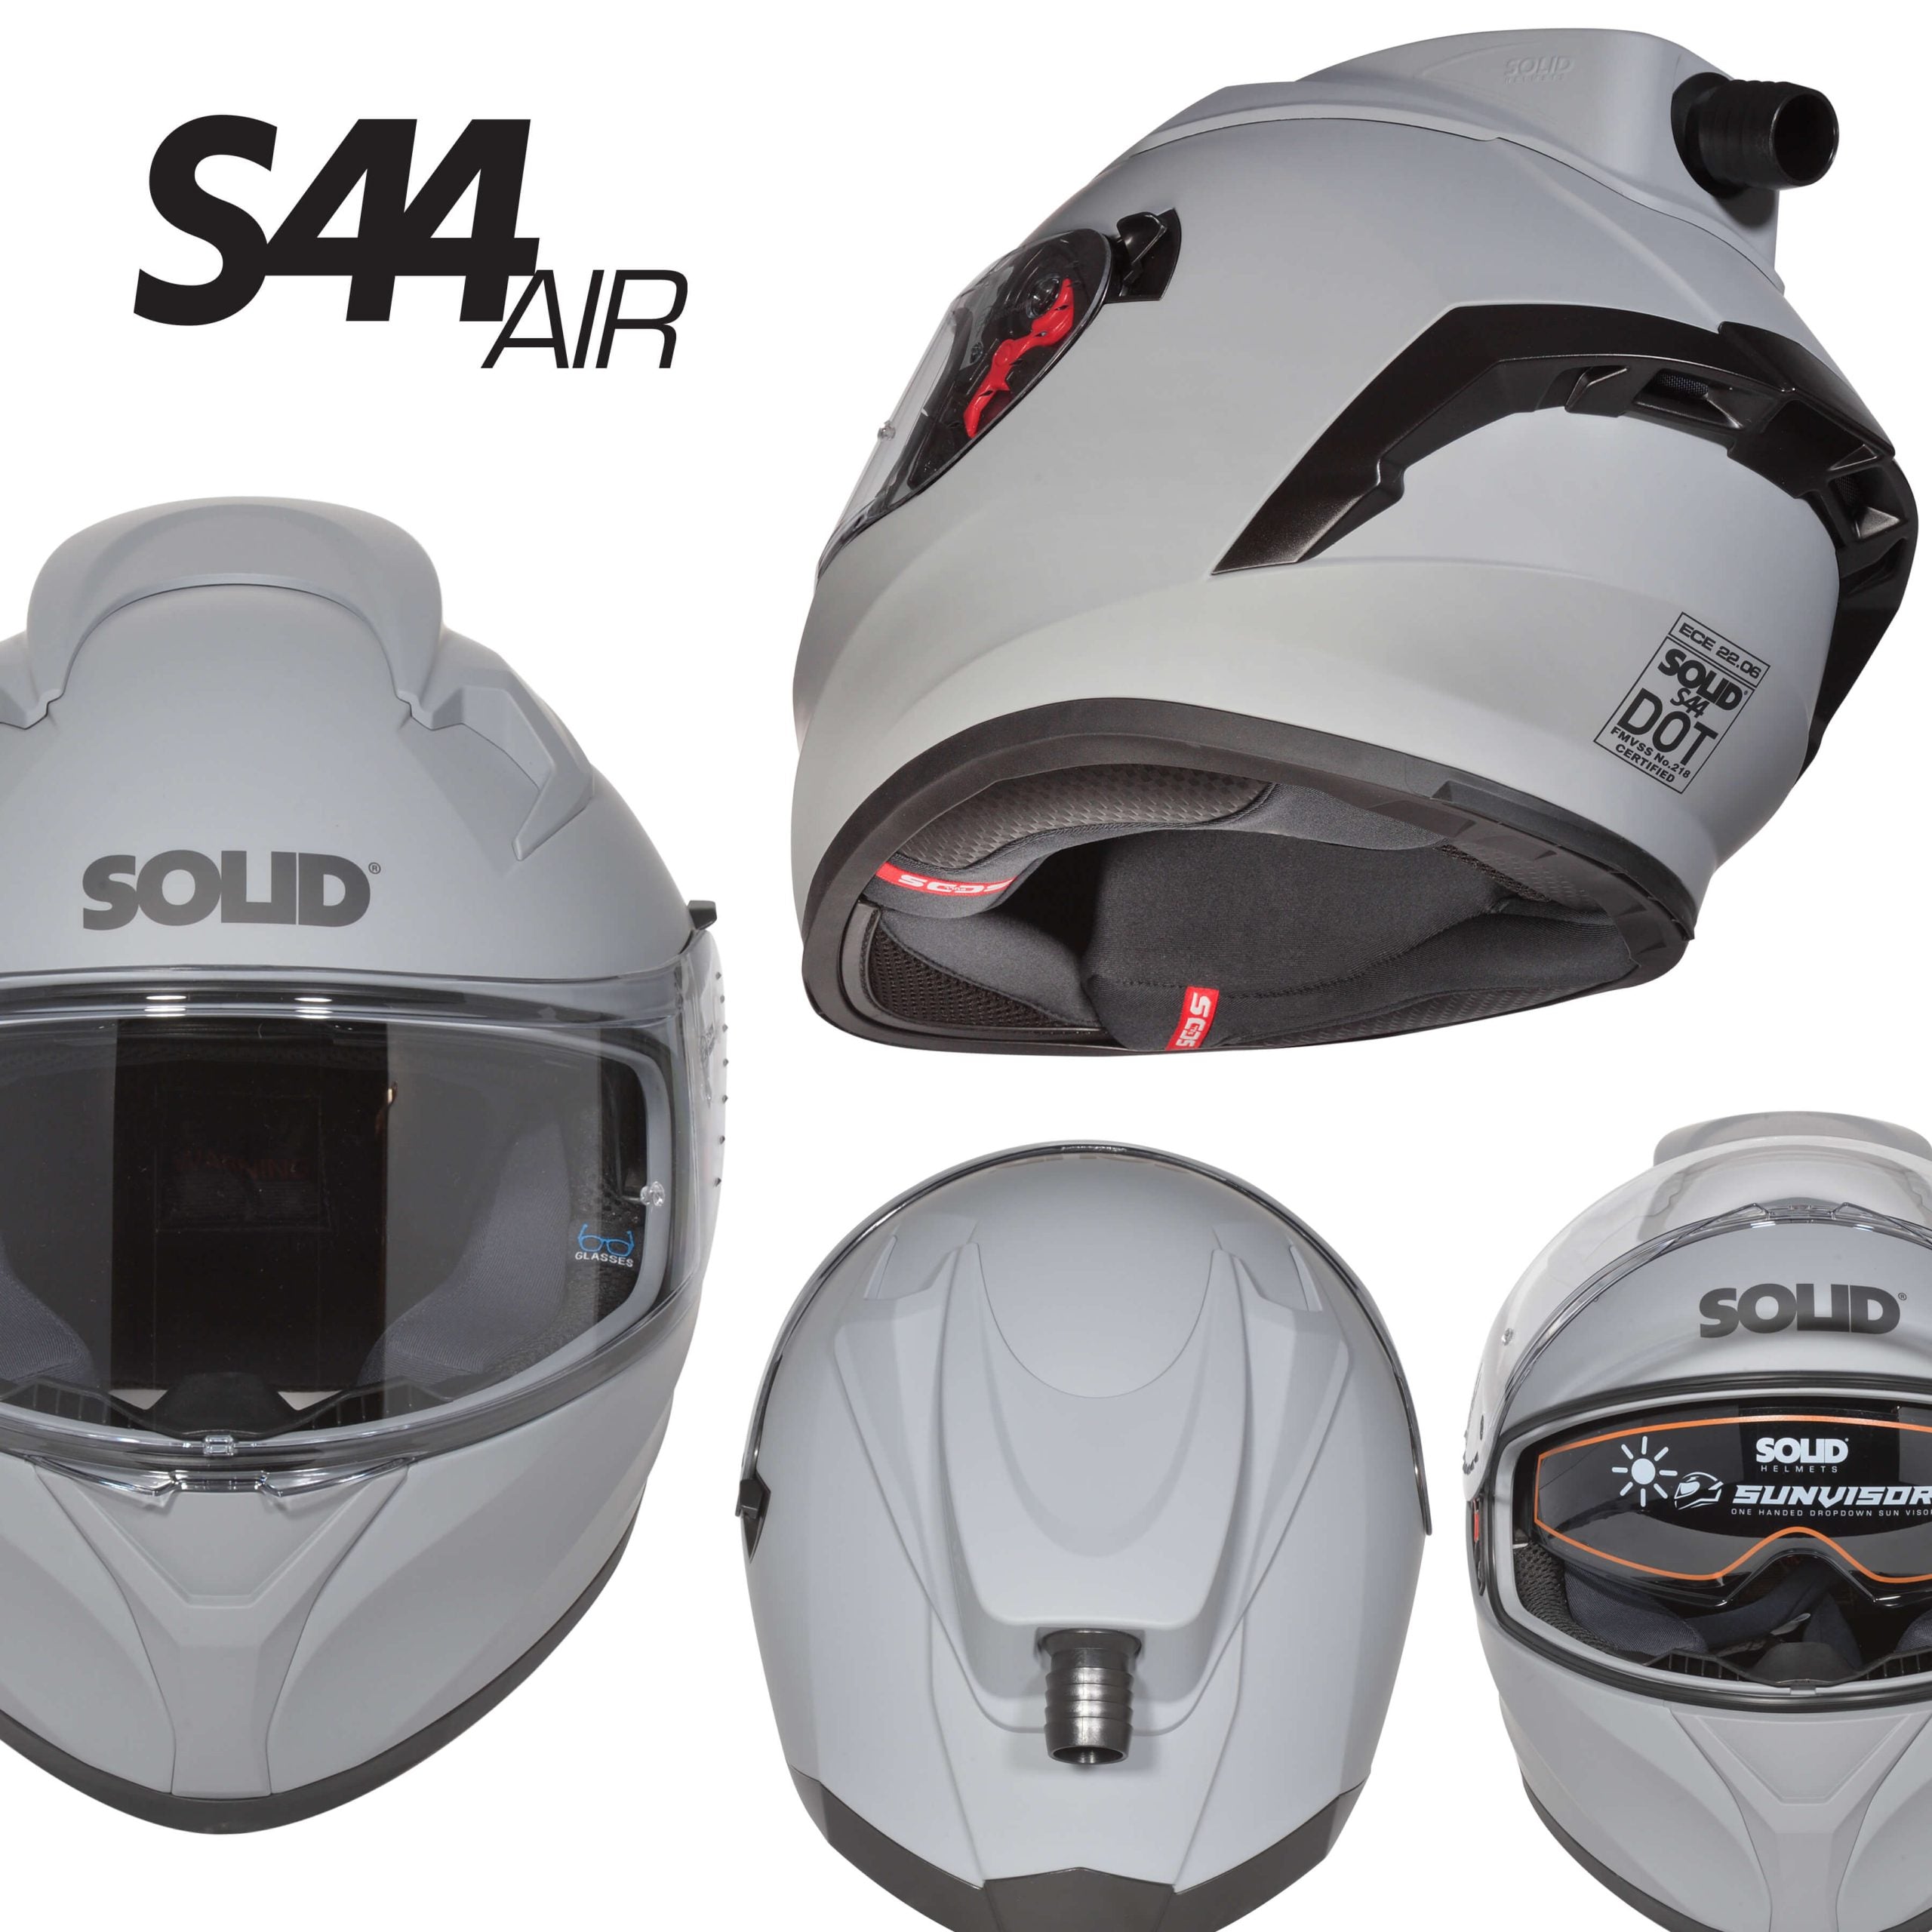 S44 AIR FULL FACE SPORT